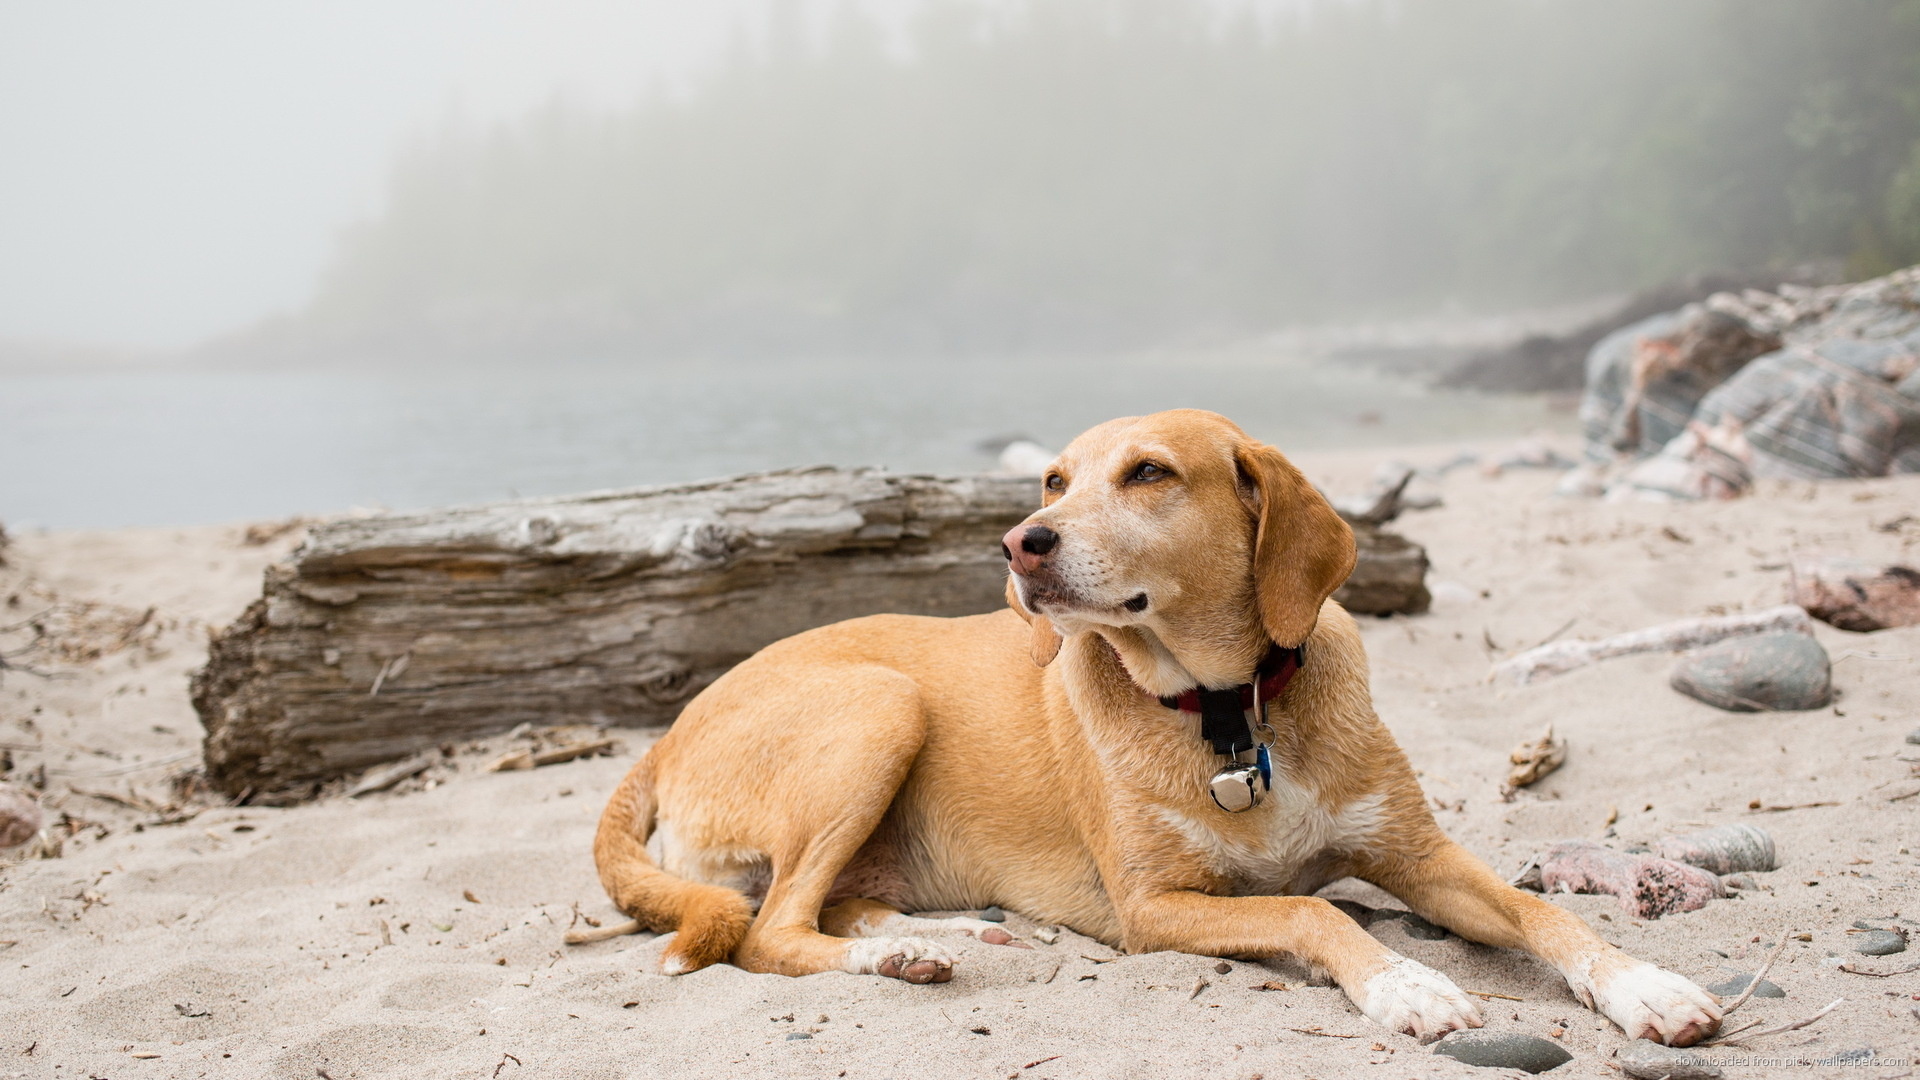 Dogs on the beach wallpaper, Fun in the sun, Beach vibes, Joyful moments, 1920x1080 Full HD Desktop